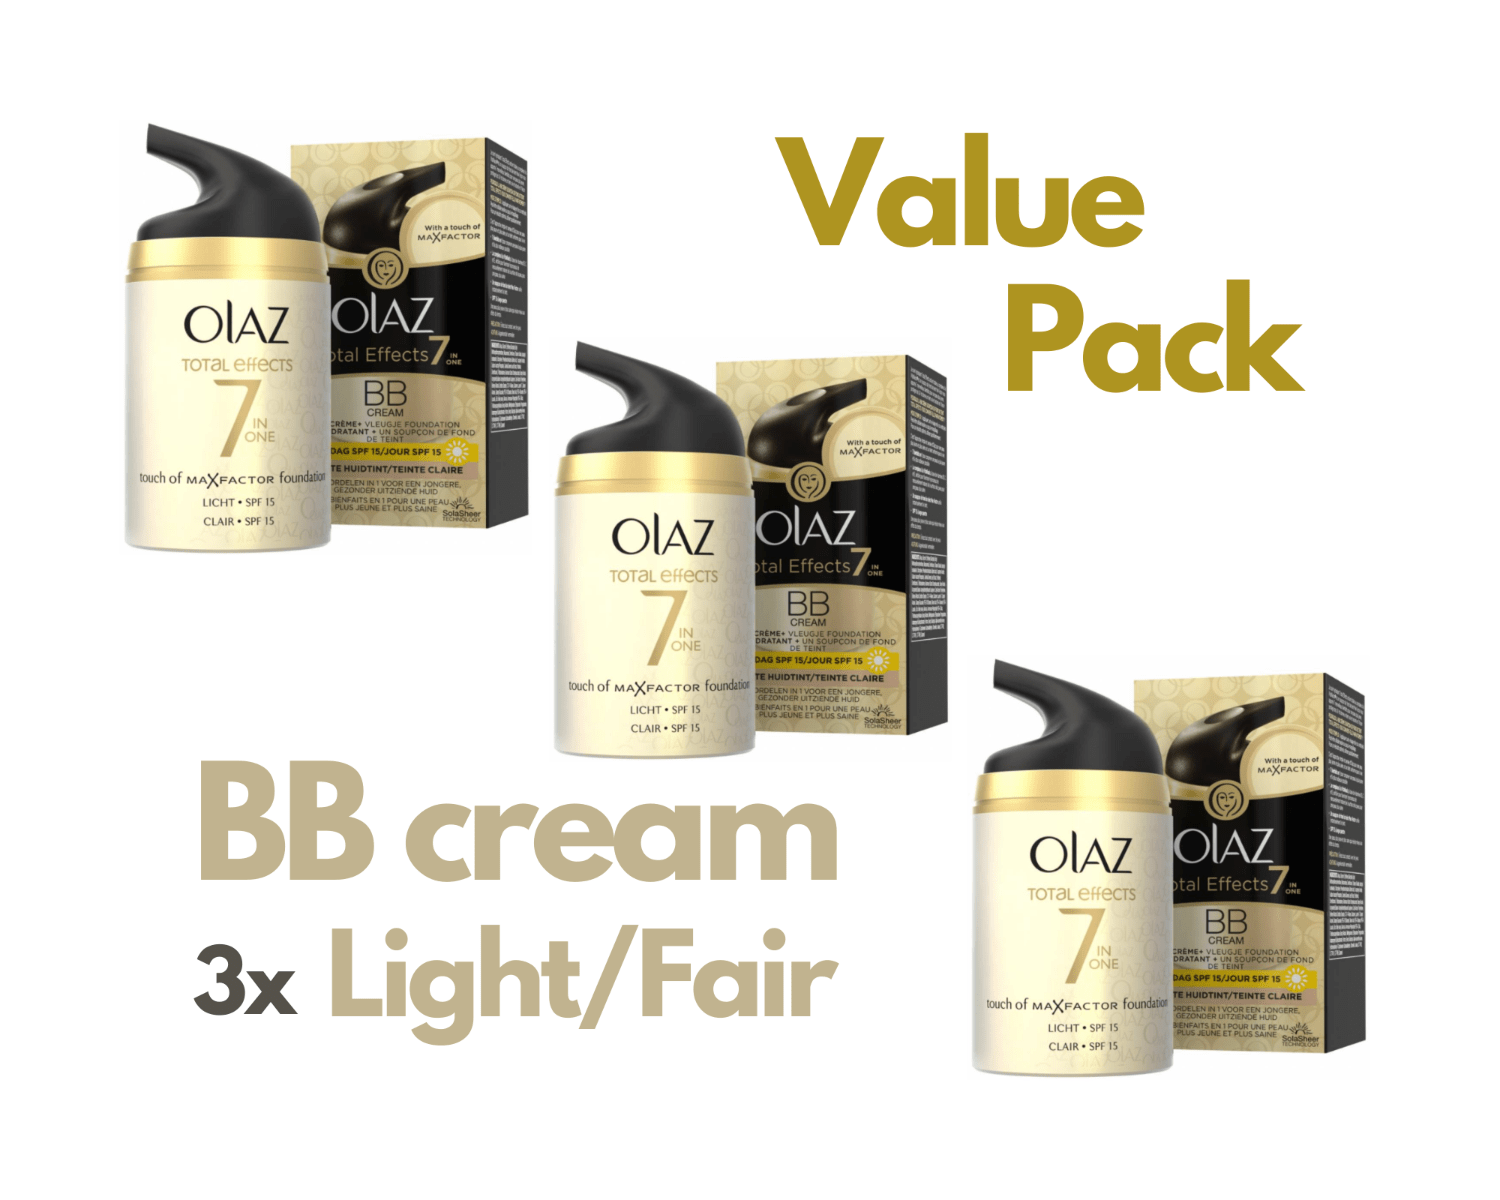 Olaz Total Effects 7-in-1 BB Cream - Light/Fair Value Pack 3x 50ml